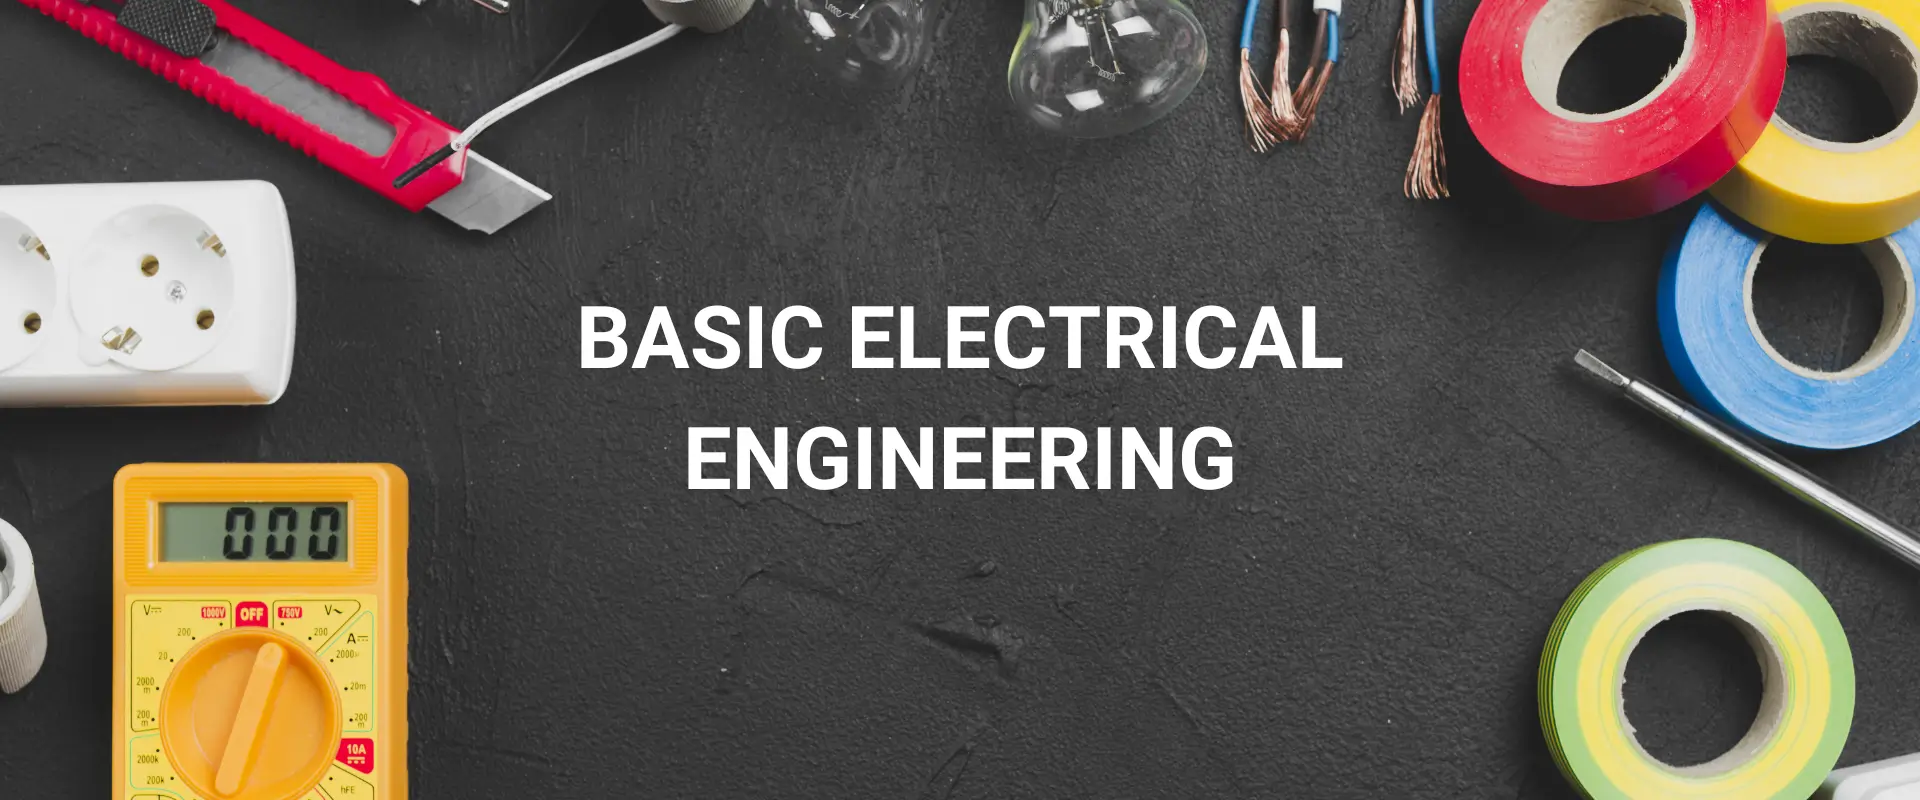 HERO-BASIC-ELECTRICAL-ENGINEERING_new